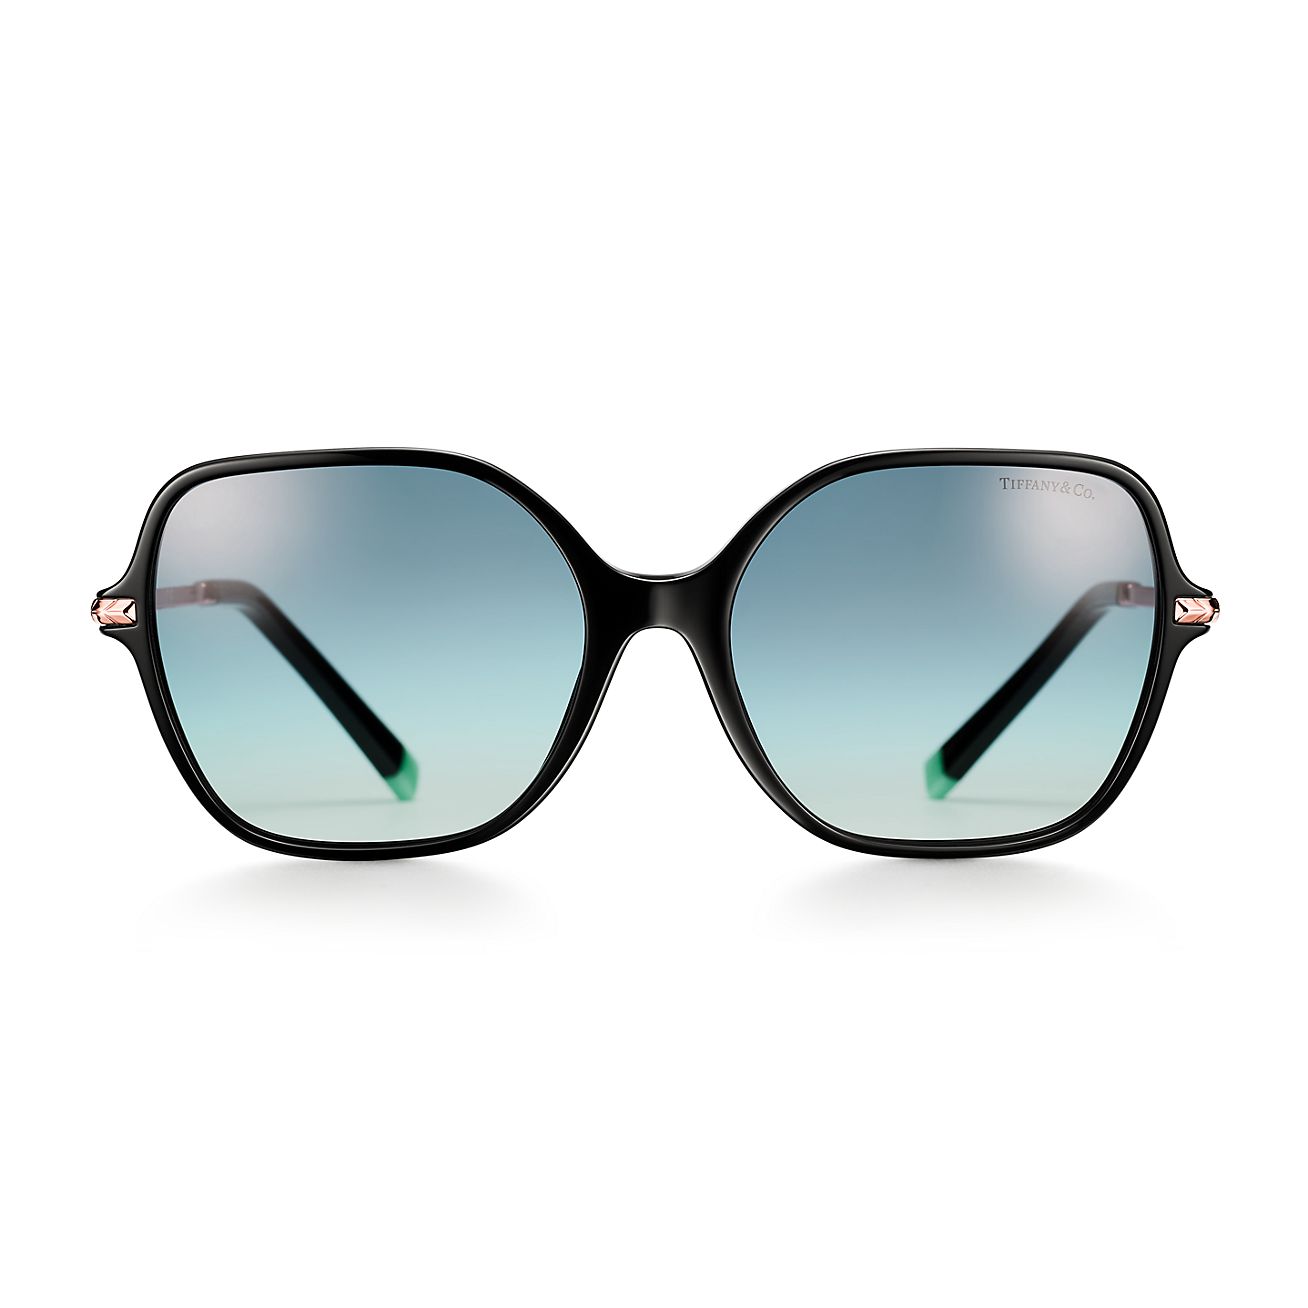 Tiffany HardWear Sunglasses in Silver-colored Metal with Dark Blue Lenses |  Tiffany & Co.